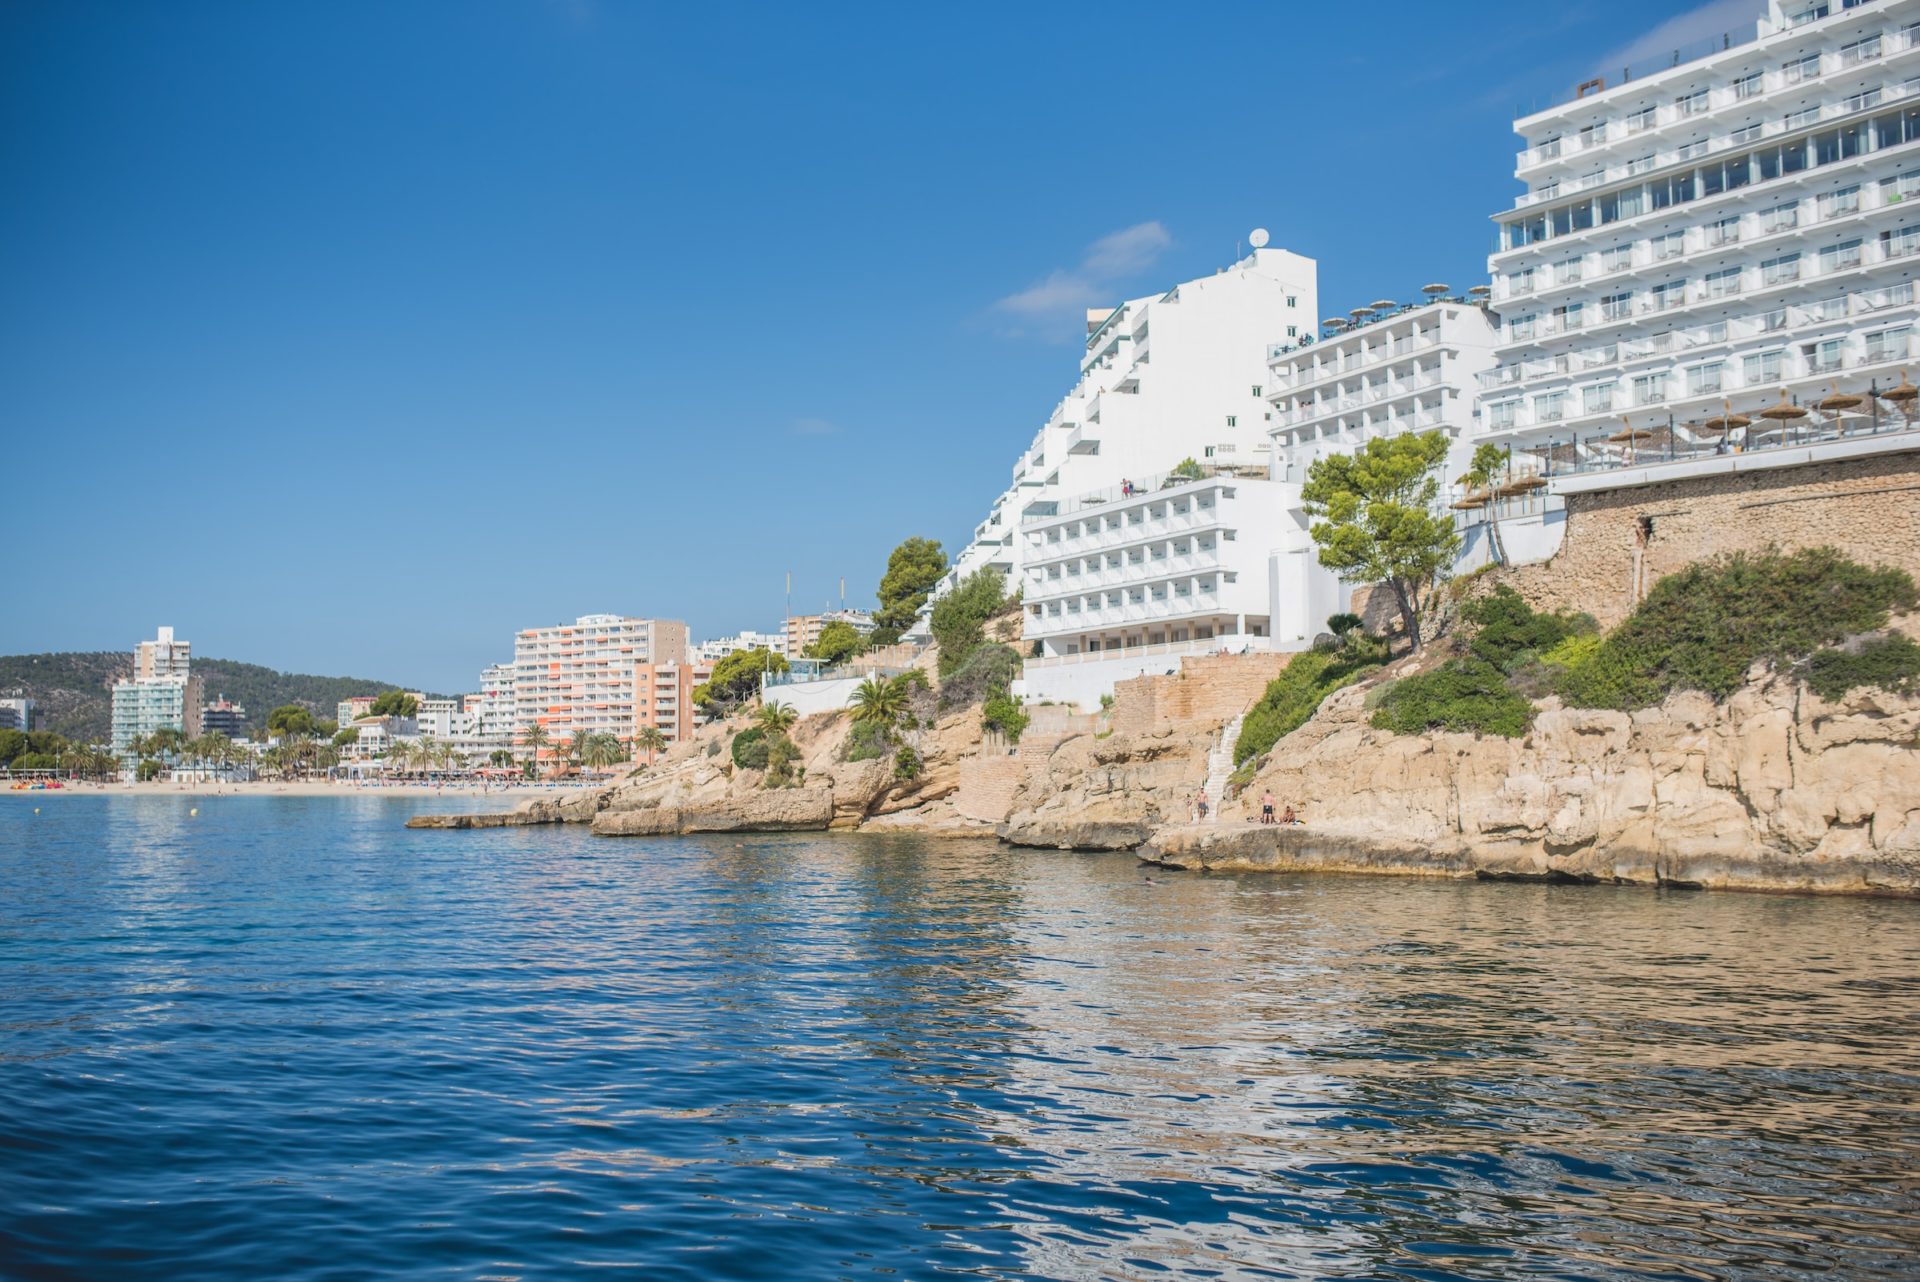 Landscape of hotels in Palma de Mallorca